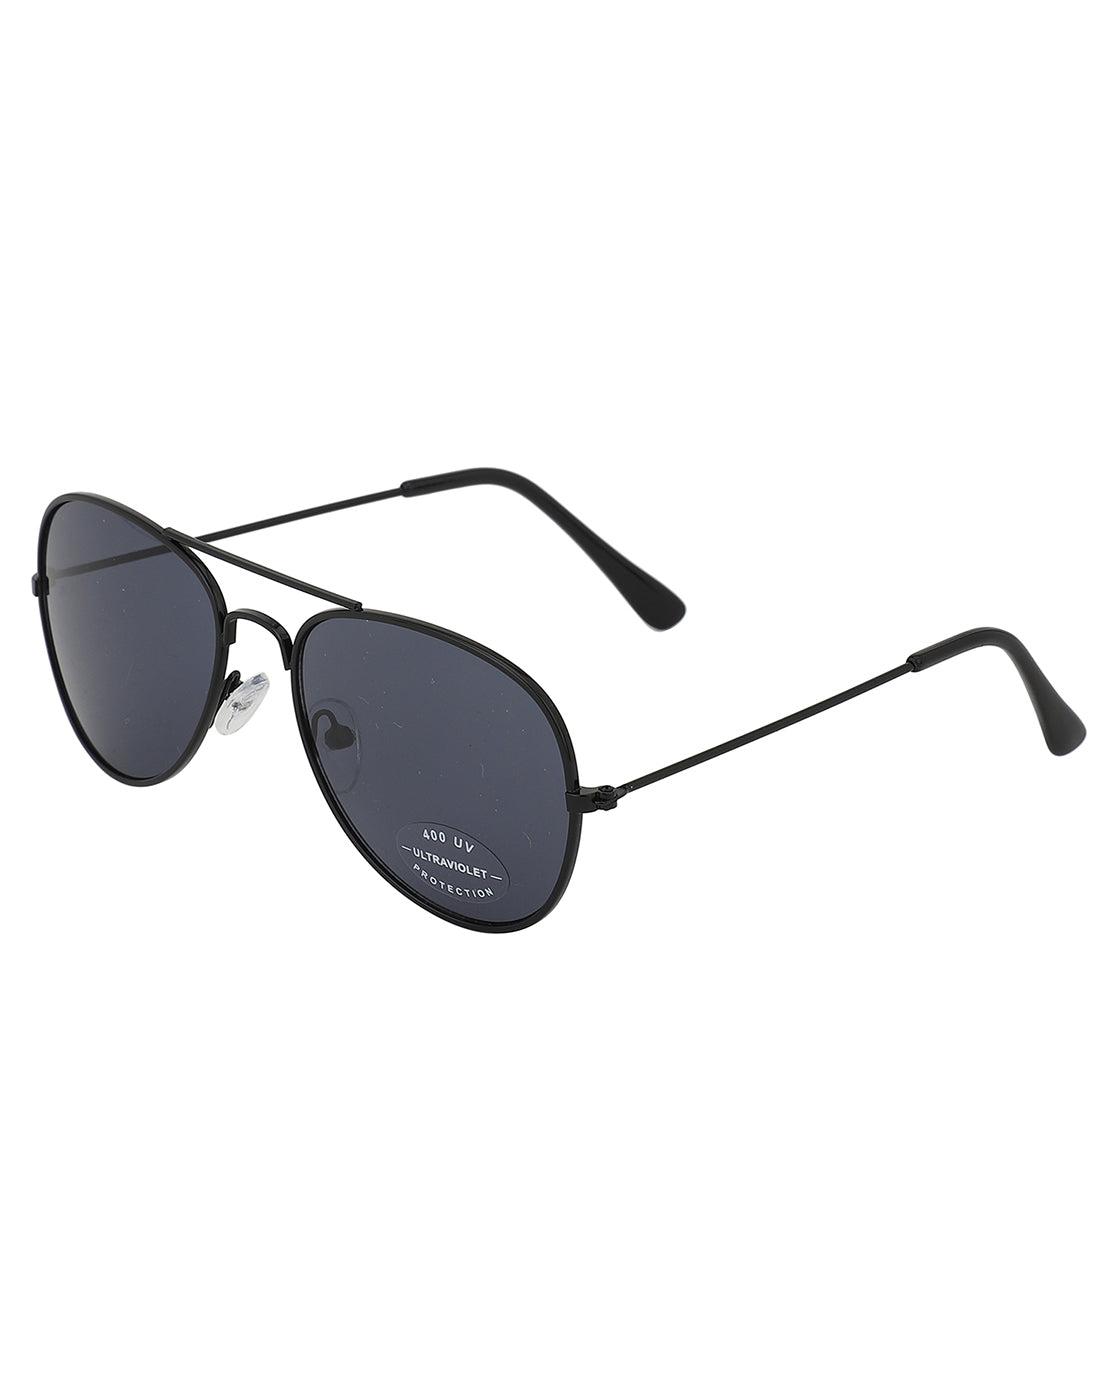 Carlton London Black Lens &amp; Black Aviator Sunglasses With Uv Protected Lens For Boy